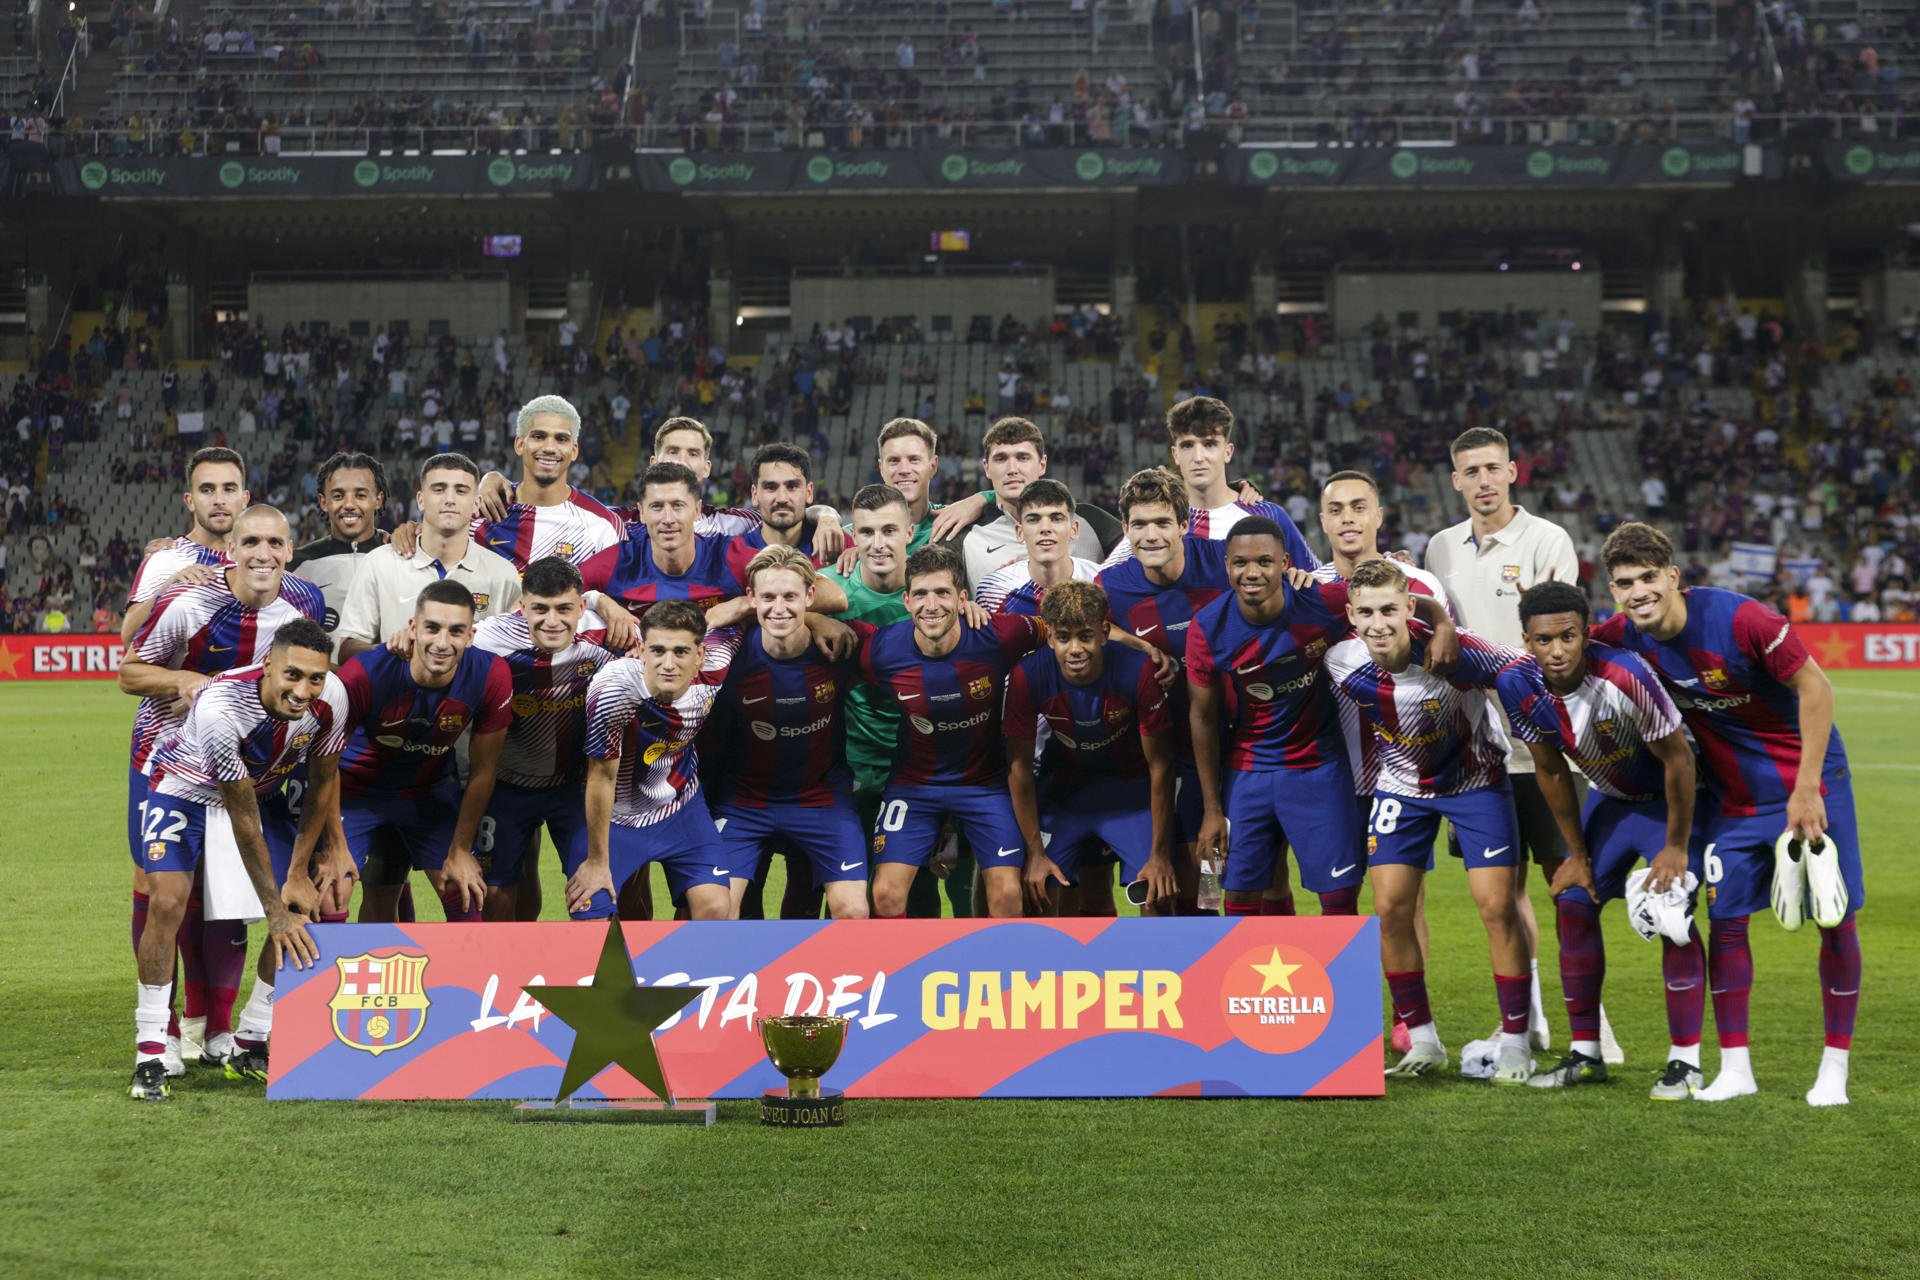 El Barça arranca la era de Montjuïc con título en el Gamper ante el Tottenham (4-2)